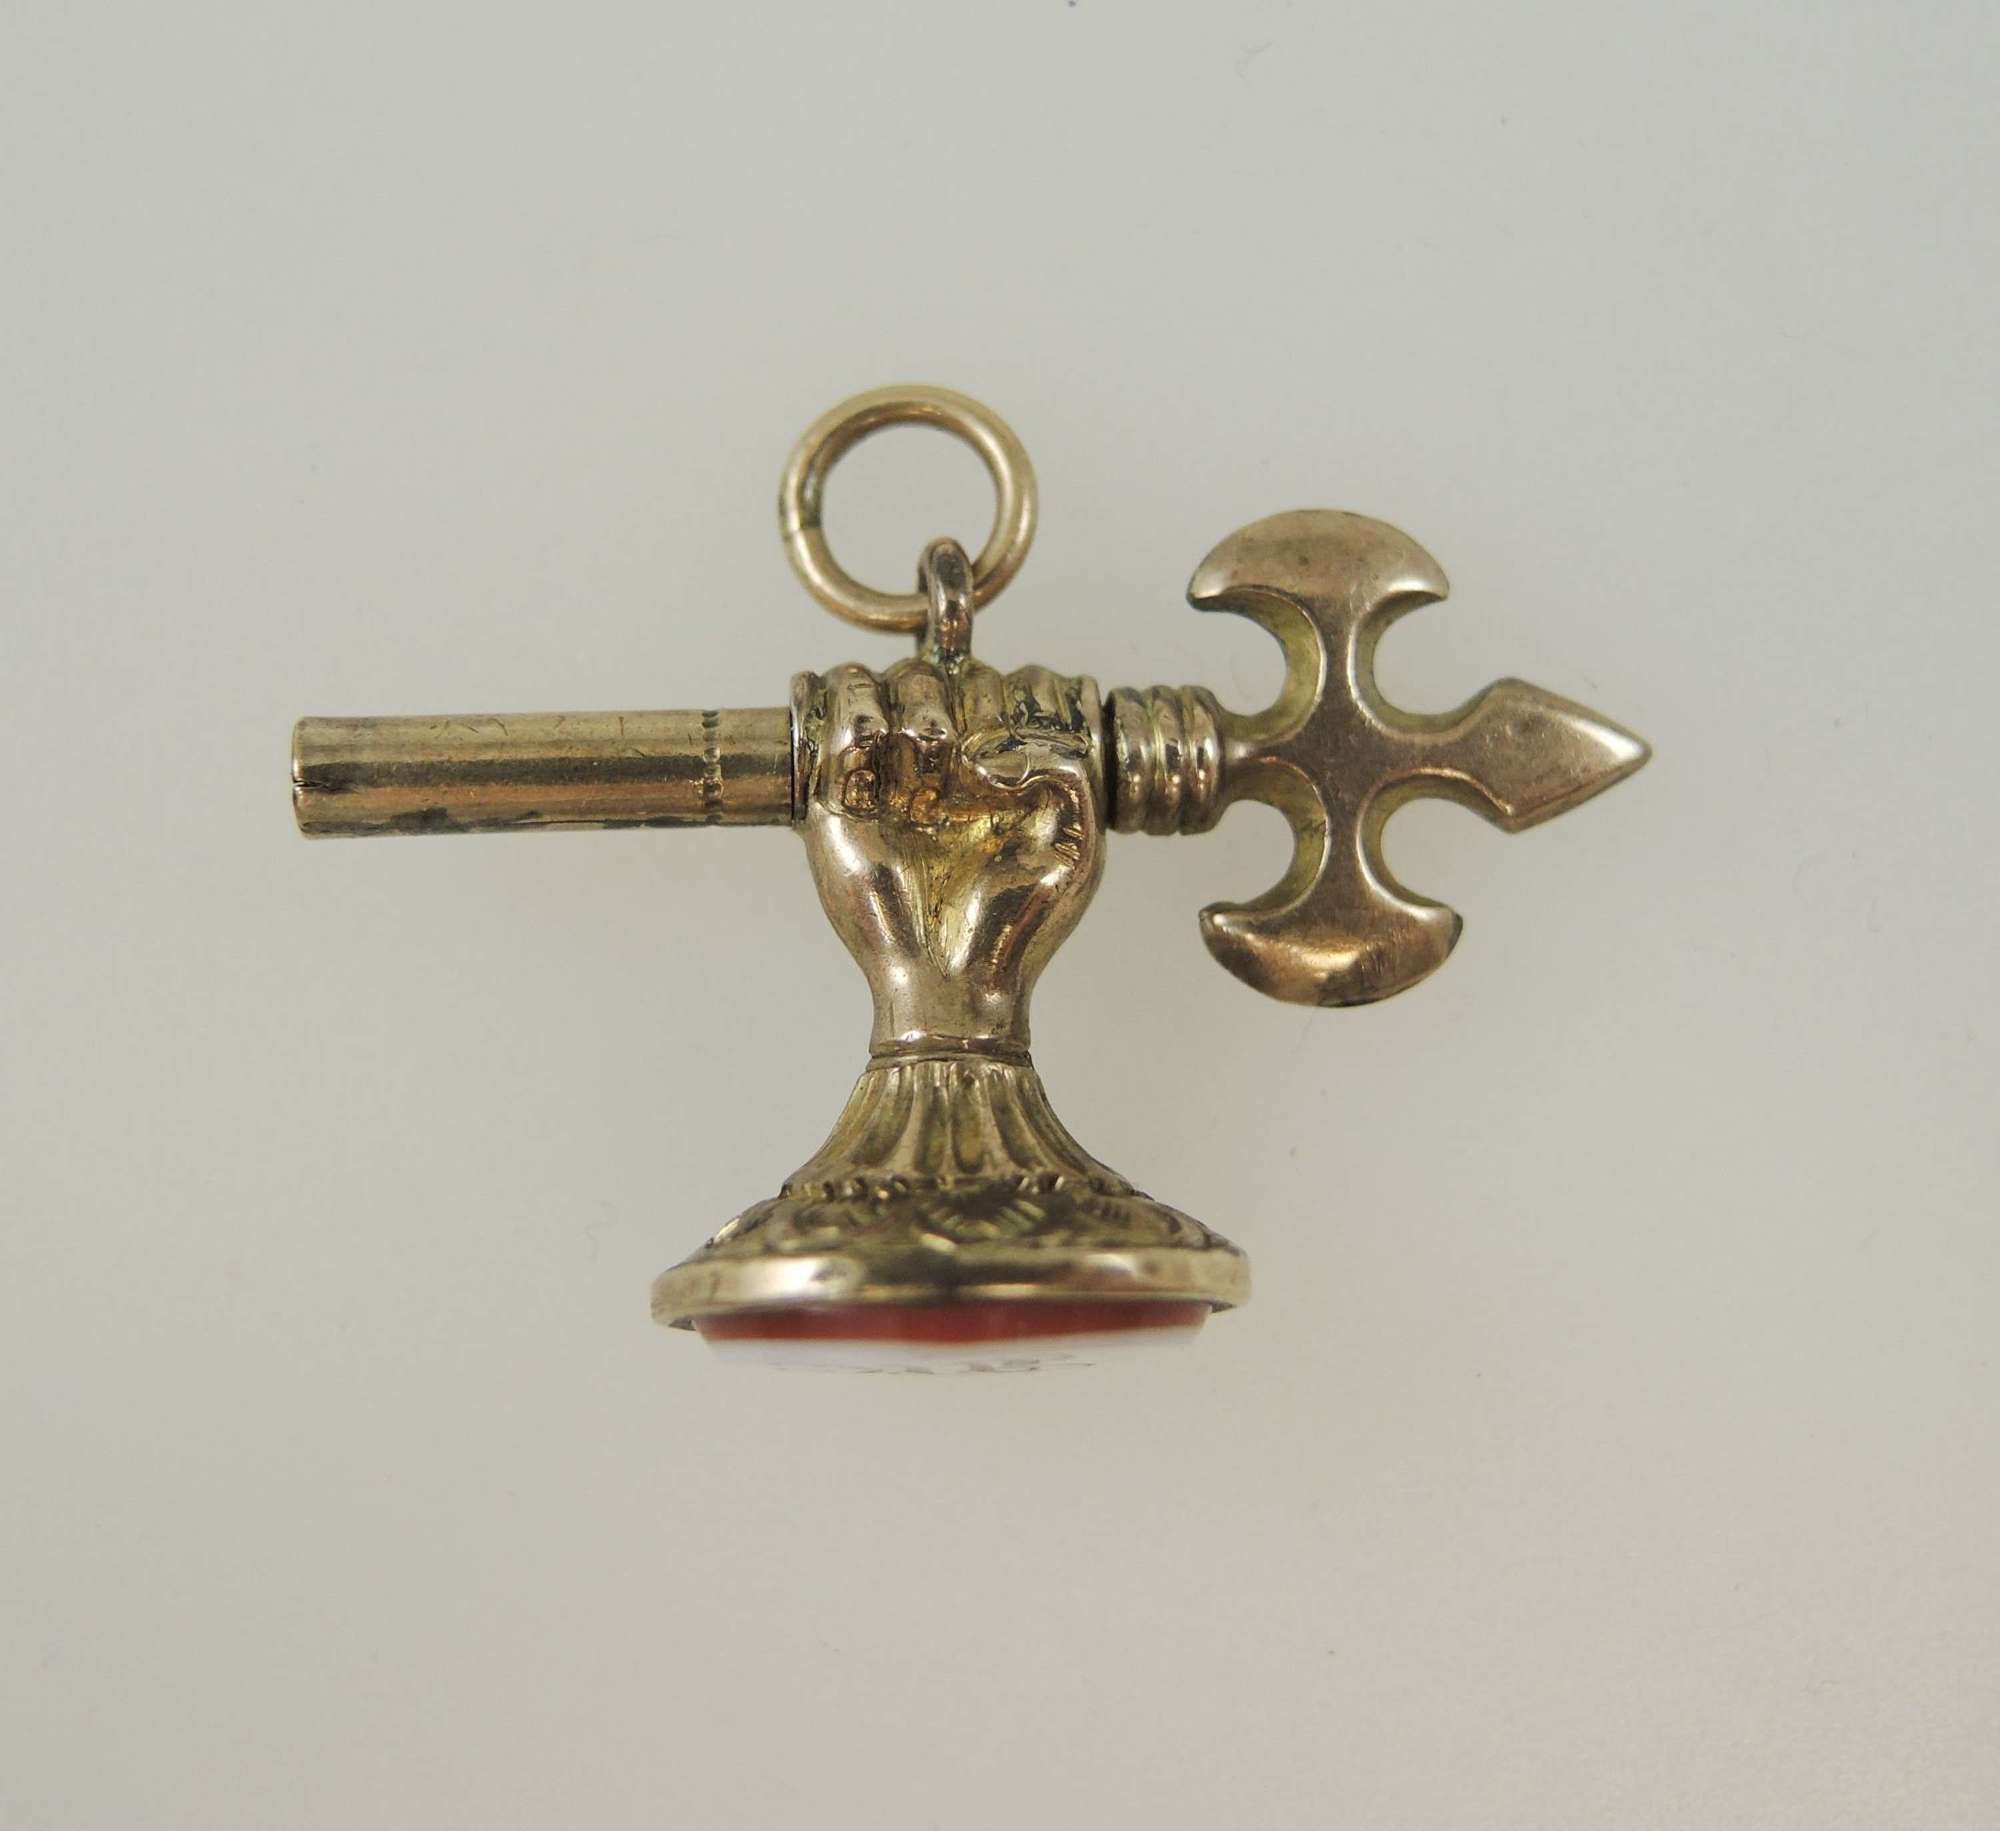 Rare gilt metal hand and Axe pocket watch key w/ JK initial seal c1850